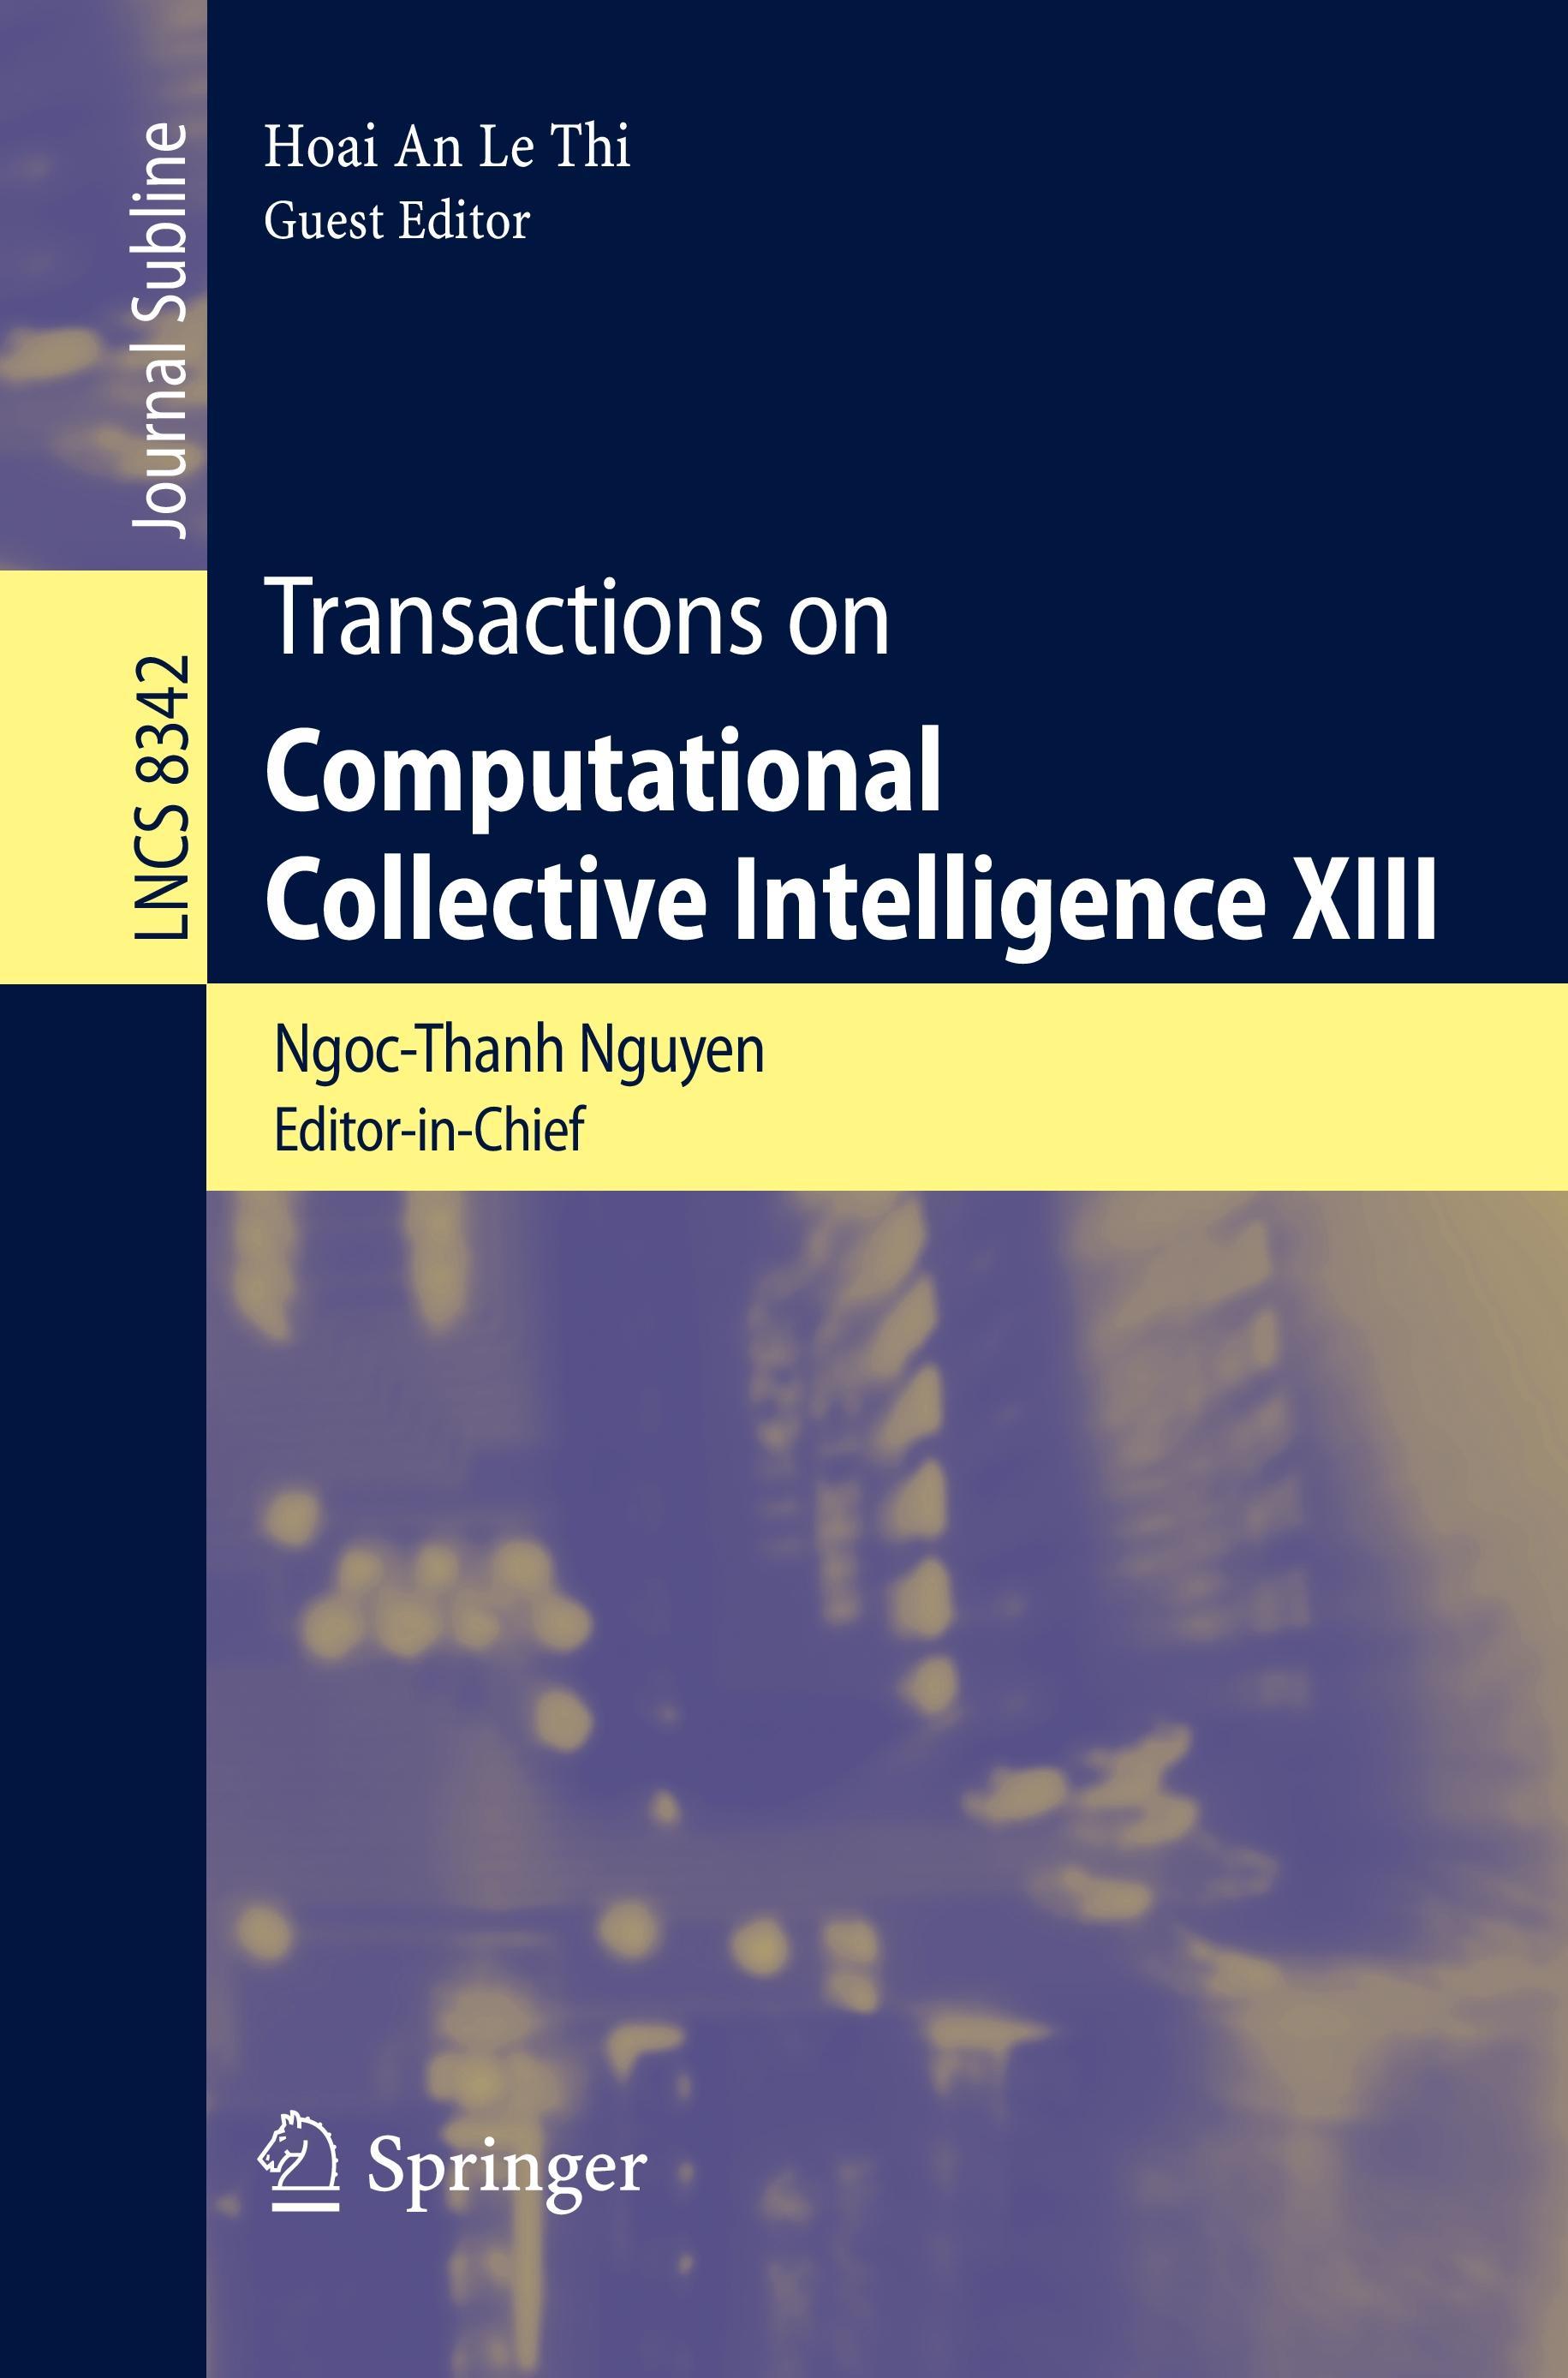 Transactions on Computational Collective Intelligence XIII - Nguyen, Ngoc Thanh|Thi, Hoai An Le